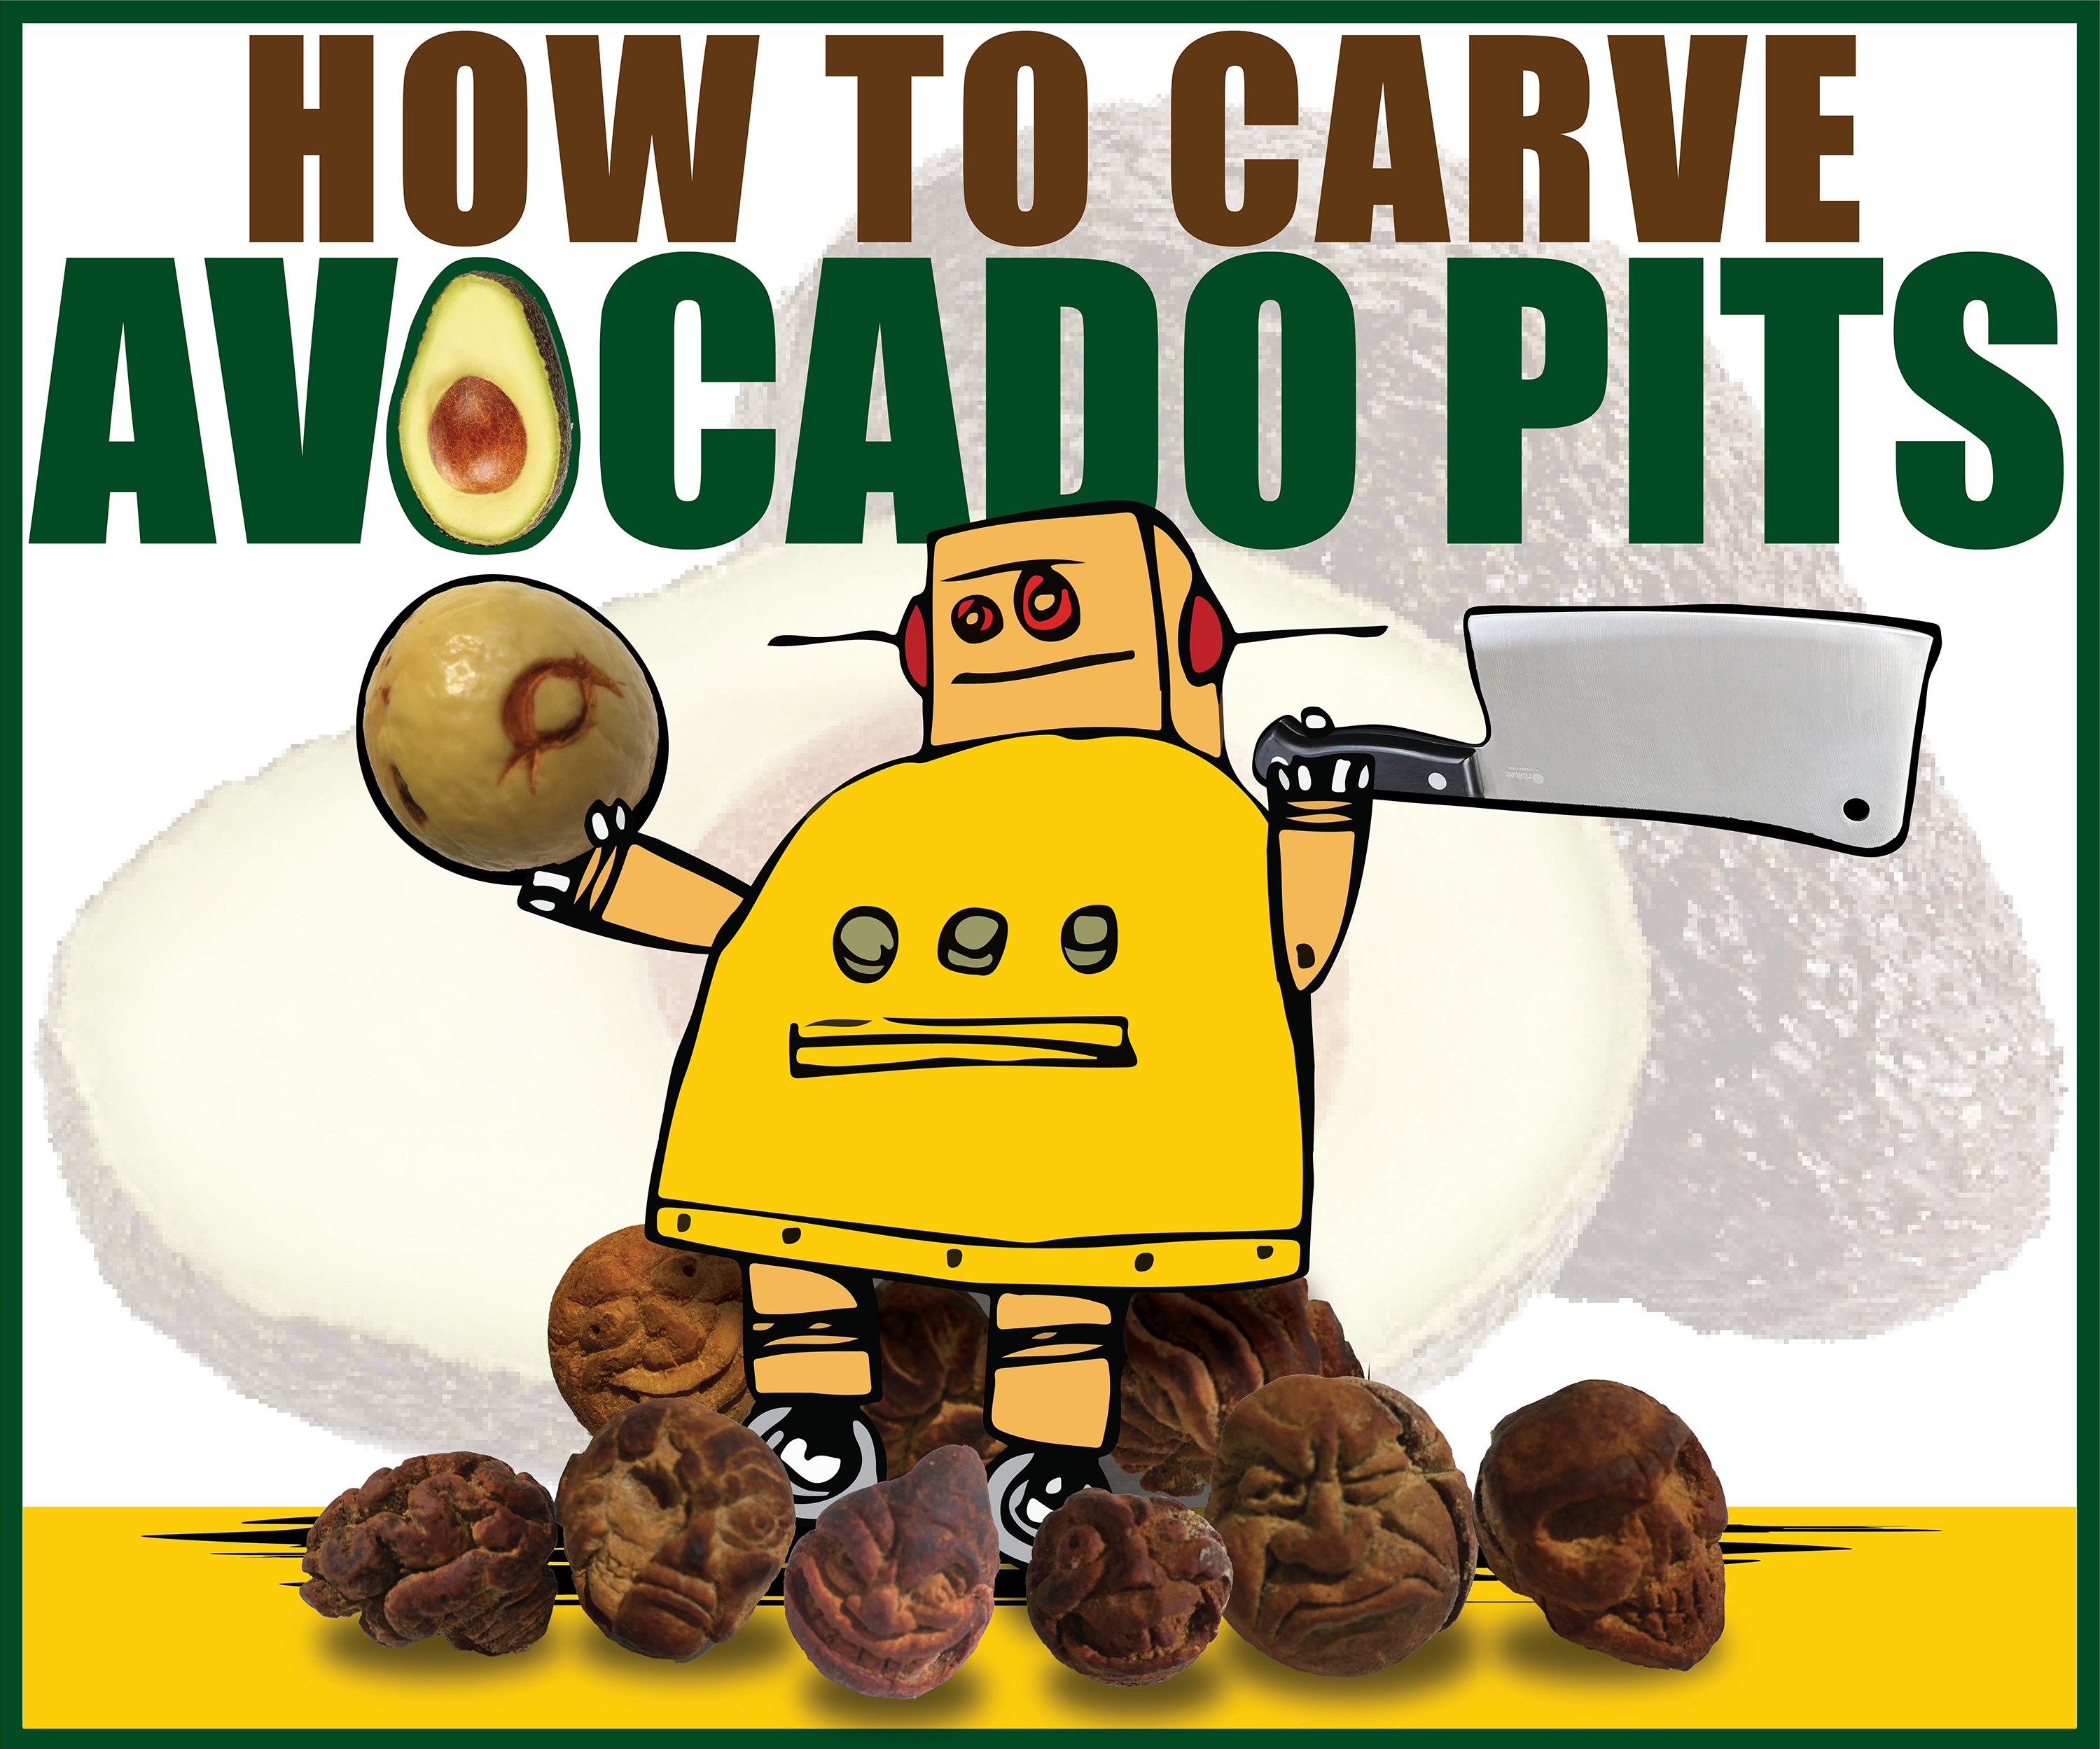 How to Carve Avocado Pits